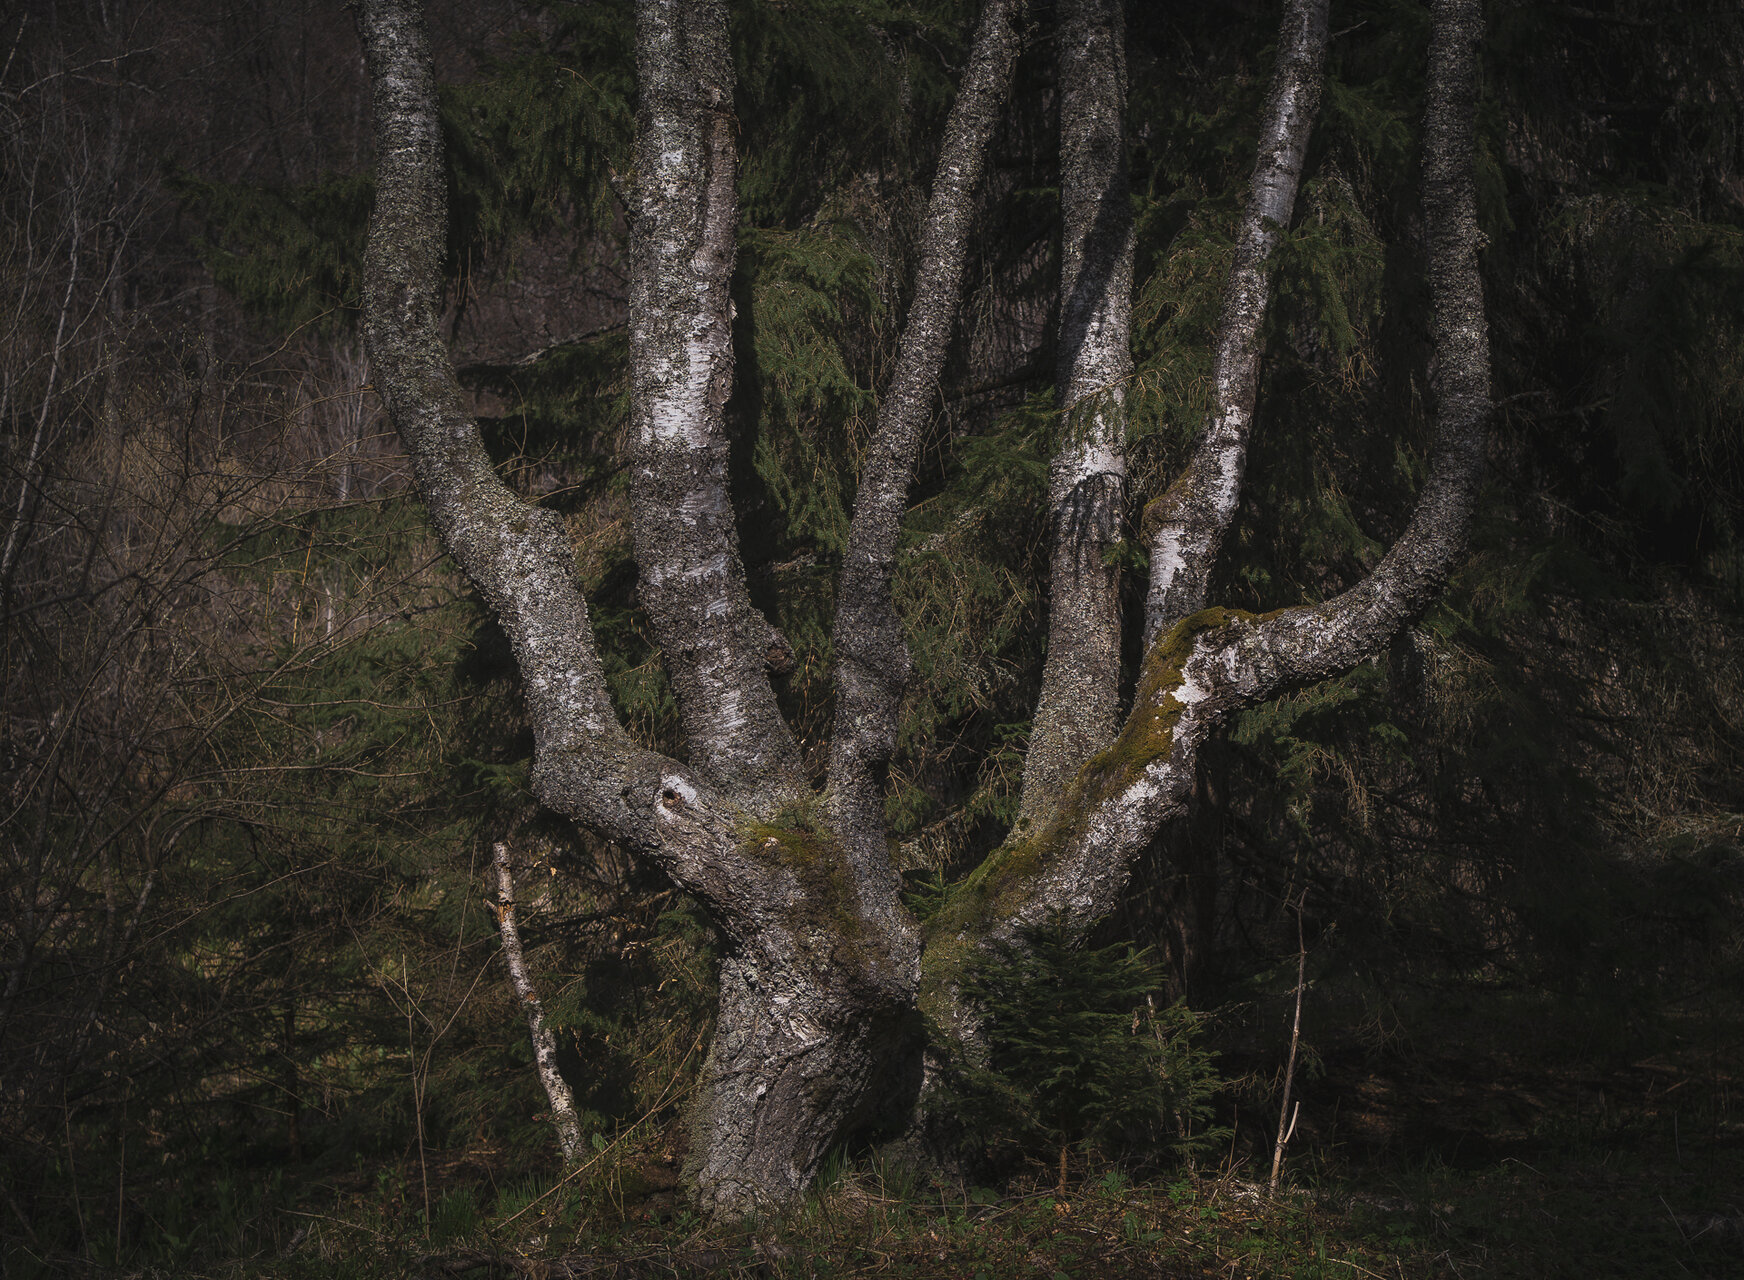 Magical forest | Author Vasil Sariev - vasilsariev | PHOTO FORUM